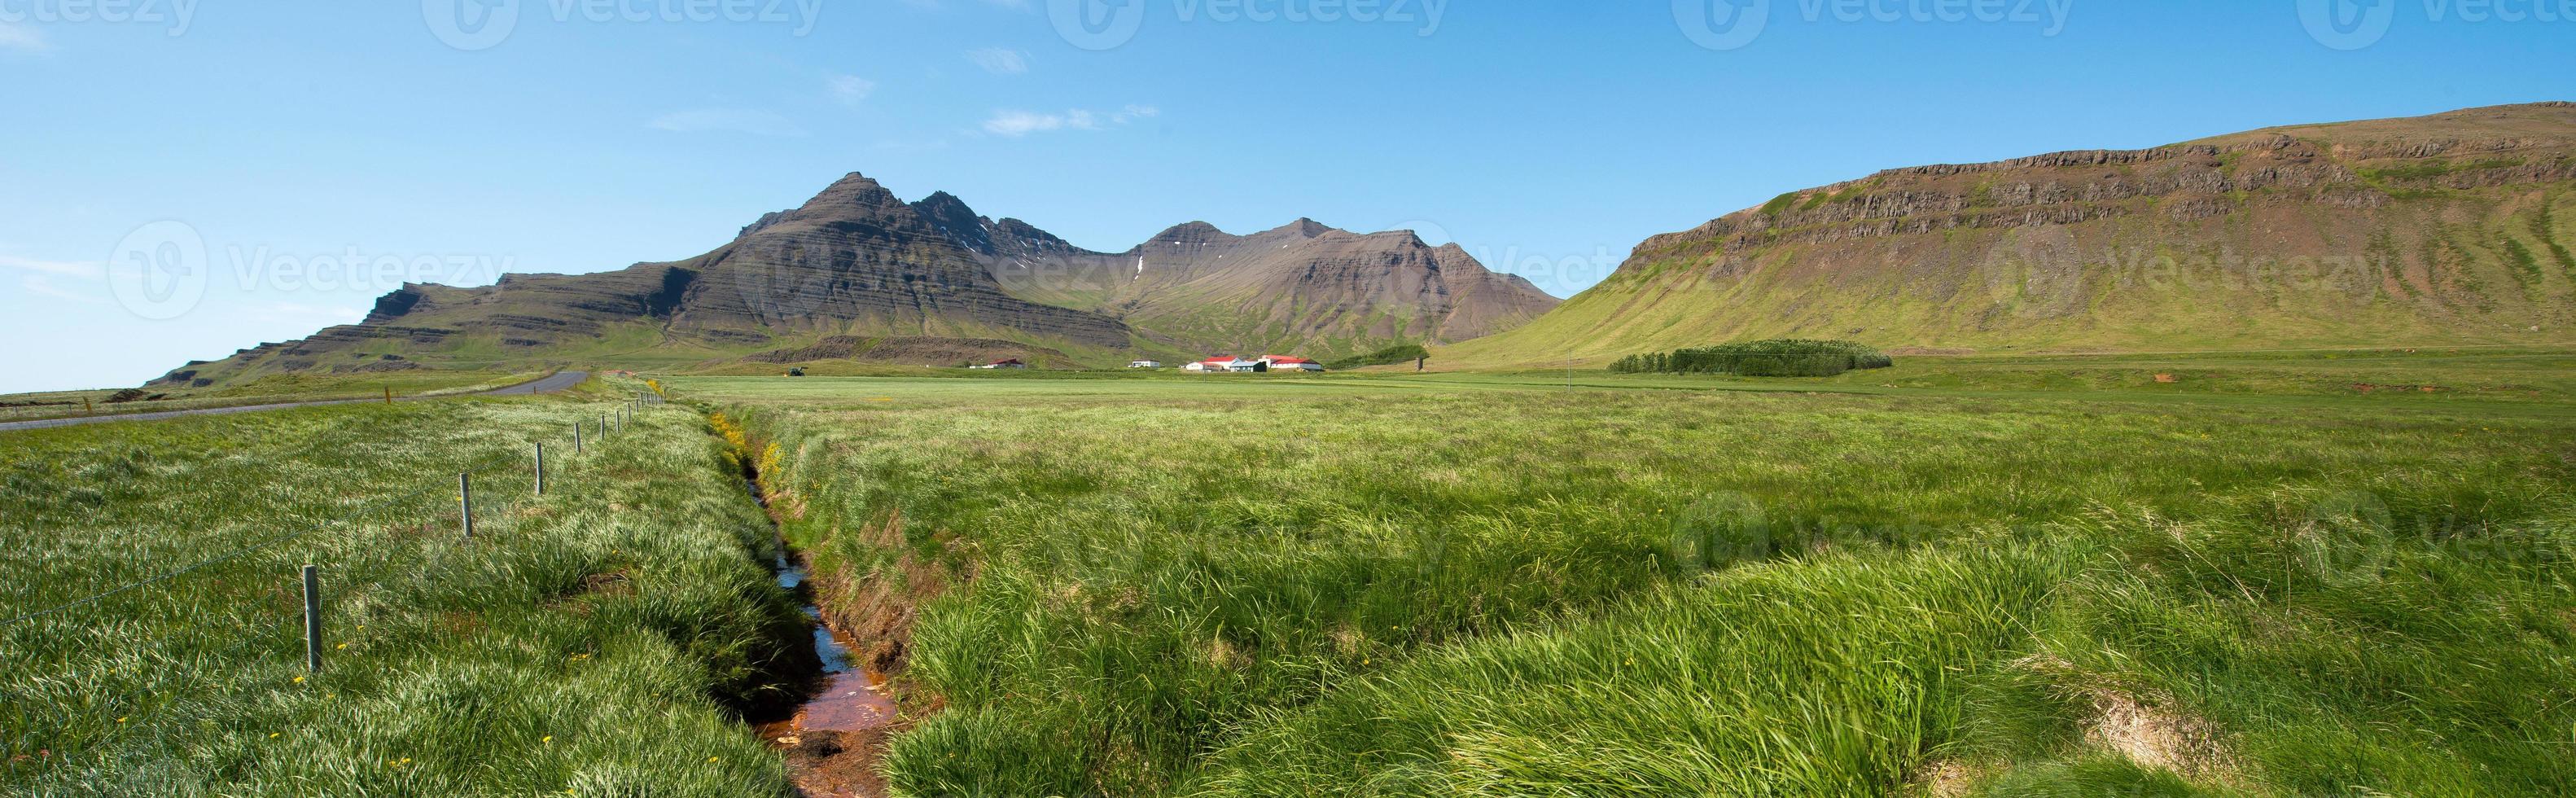 Península Snaefellsnes, Islândia foto